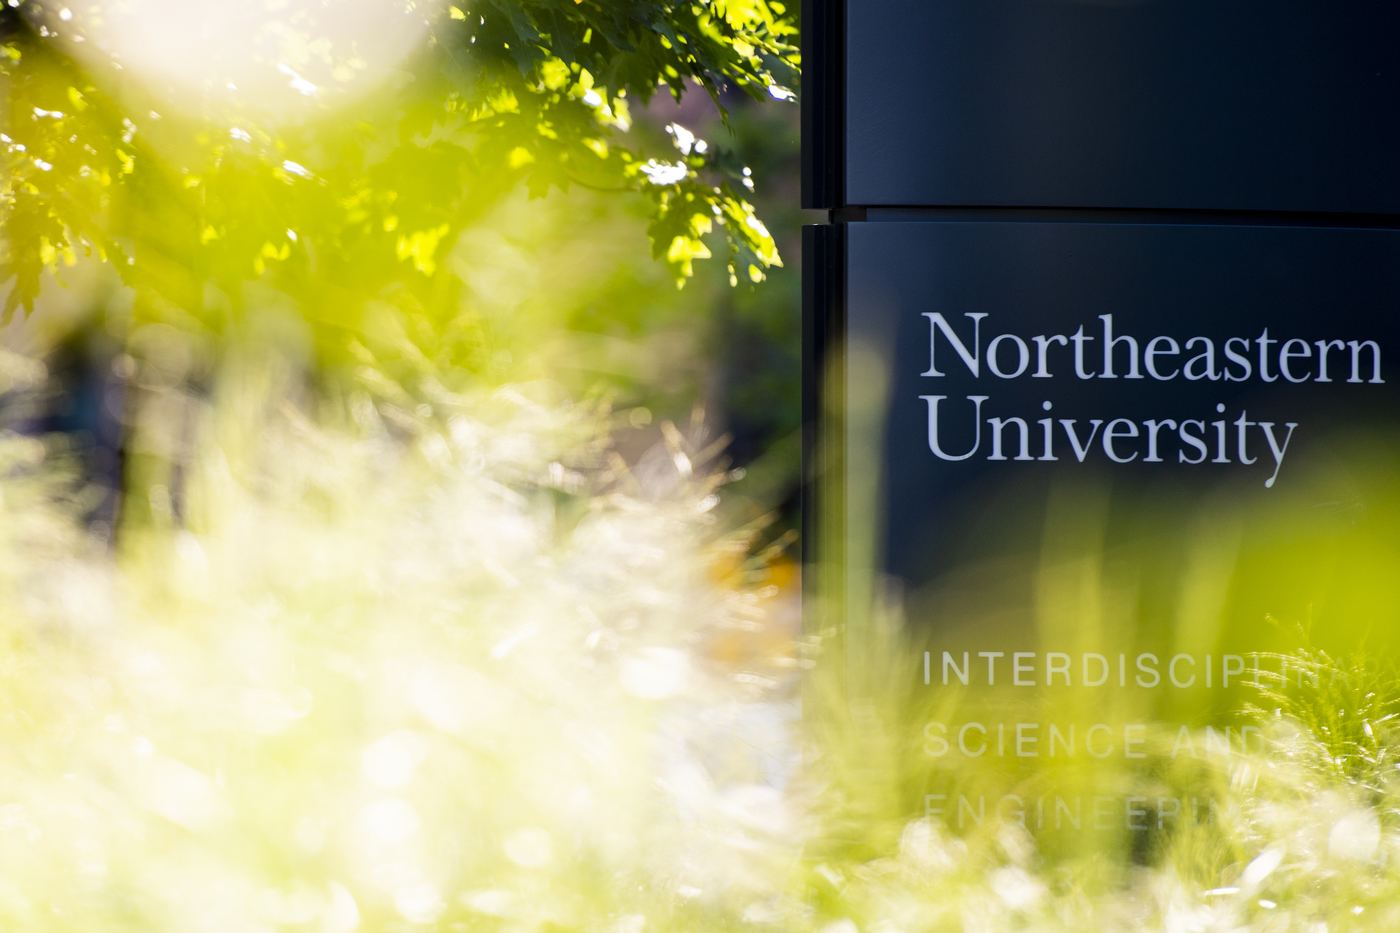 northeastern university campus sign